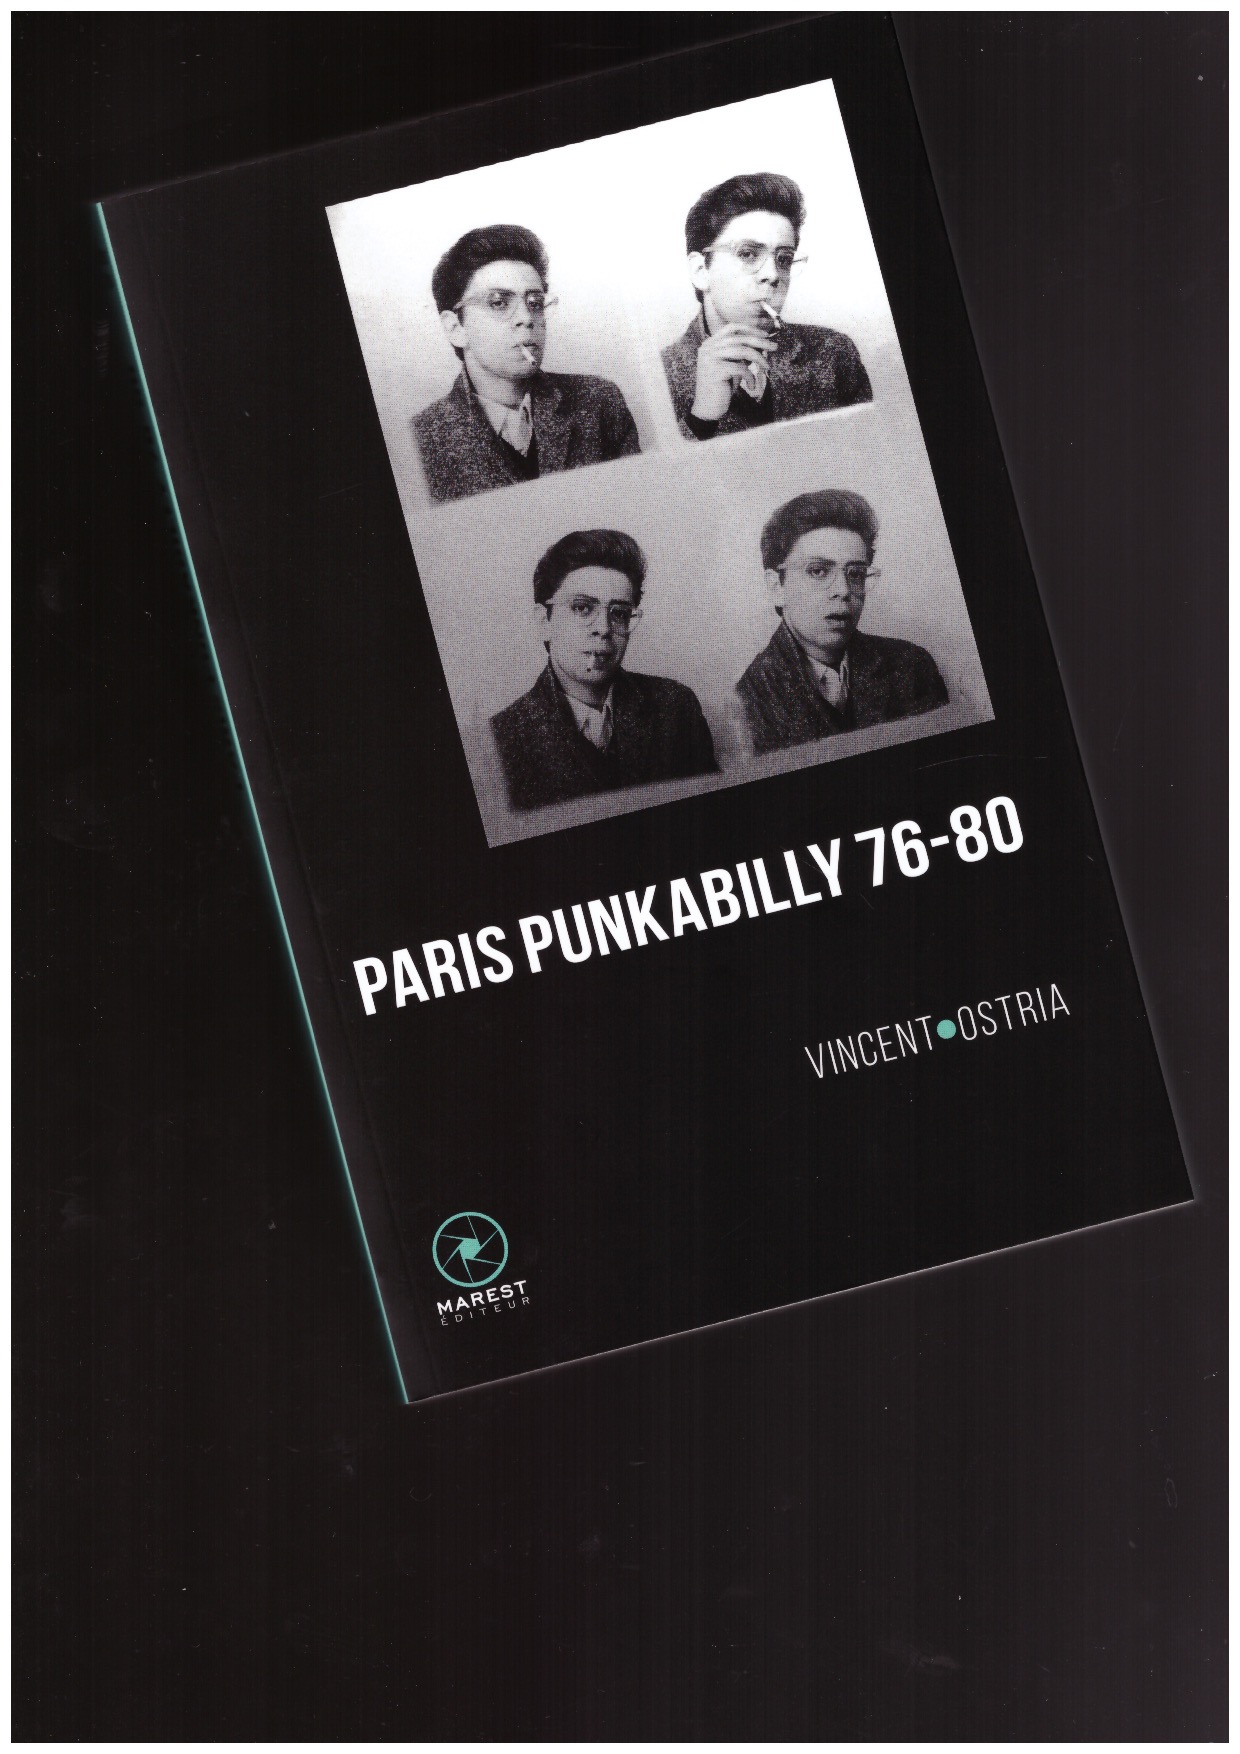 OSTRIA, Vincent - Paris-Punkabilly 76-80